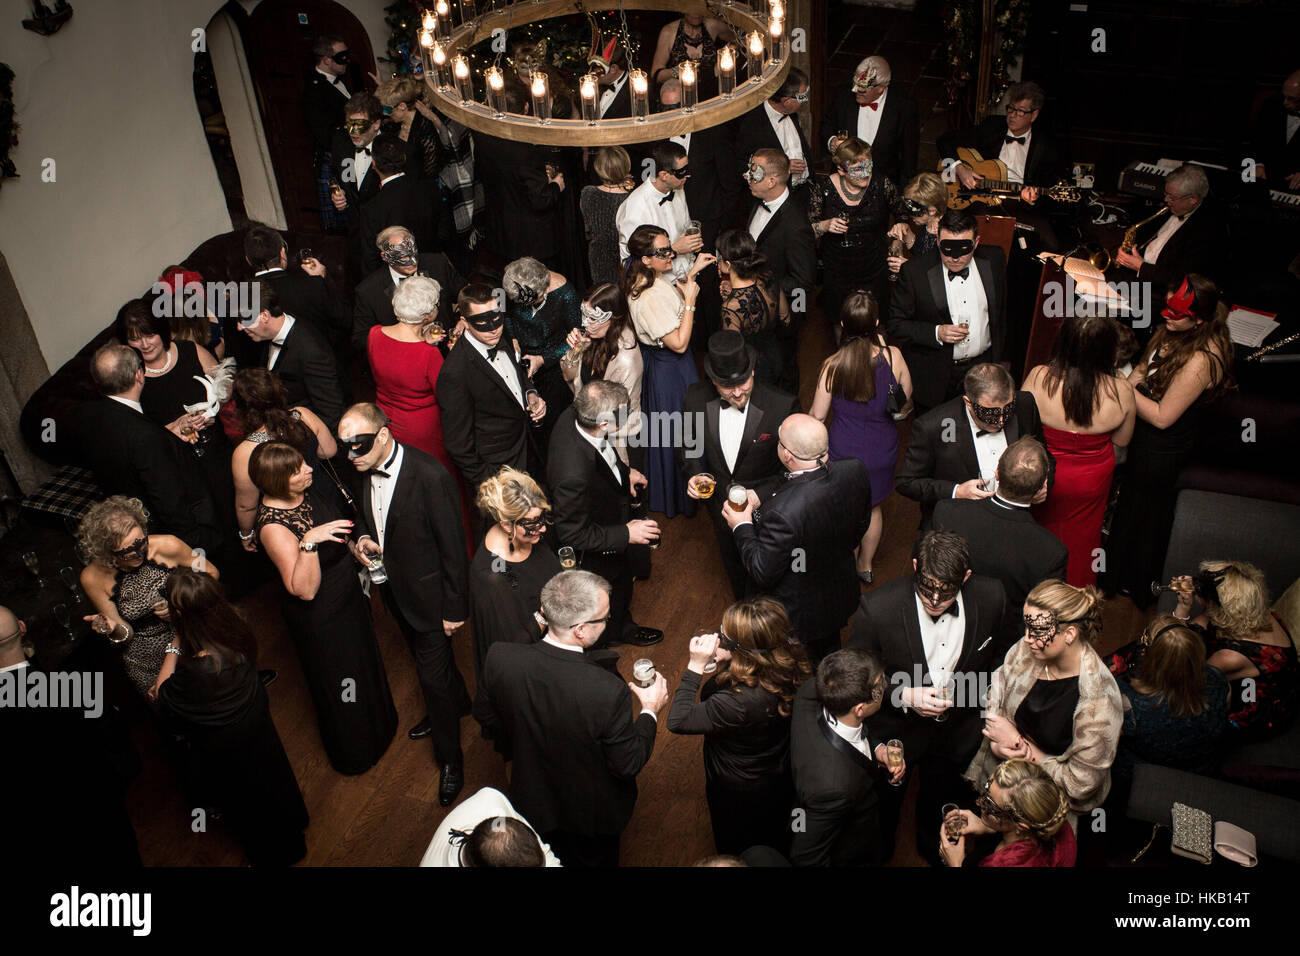 New Years Eve Masquerade Ball, Boringdon Hall, Royaume-Uni. Banque D'Images